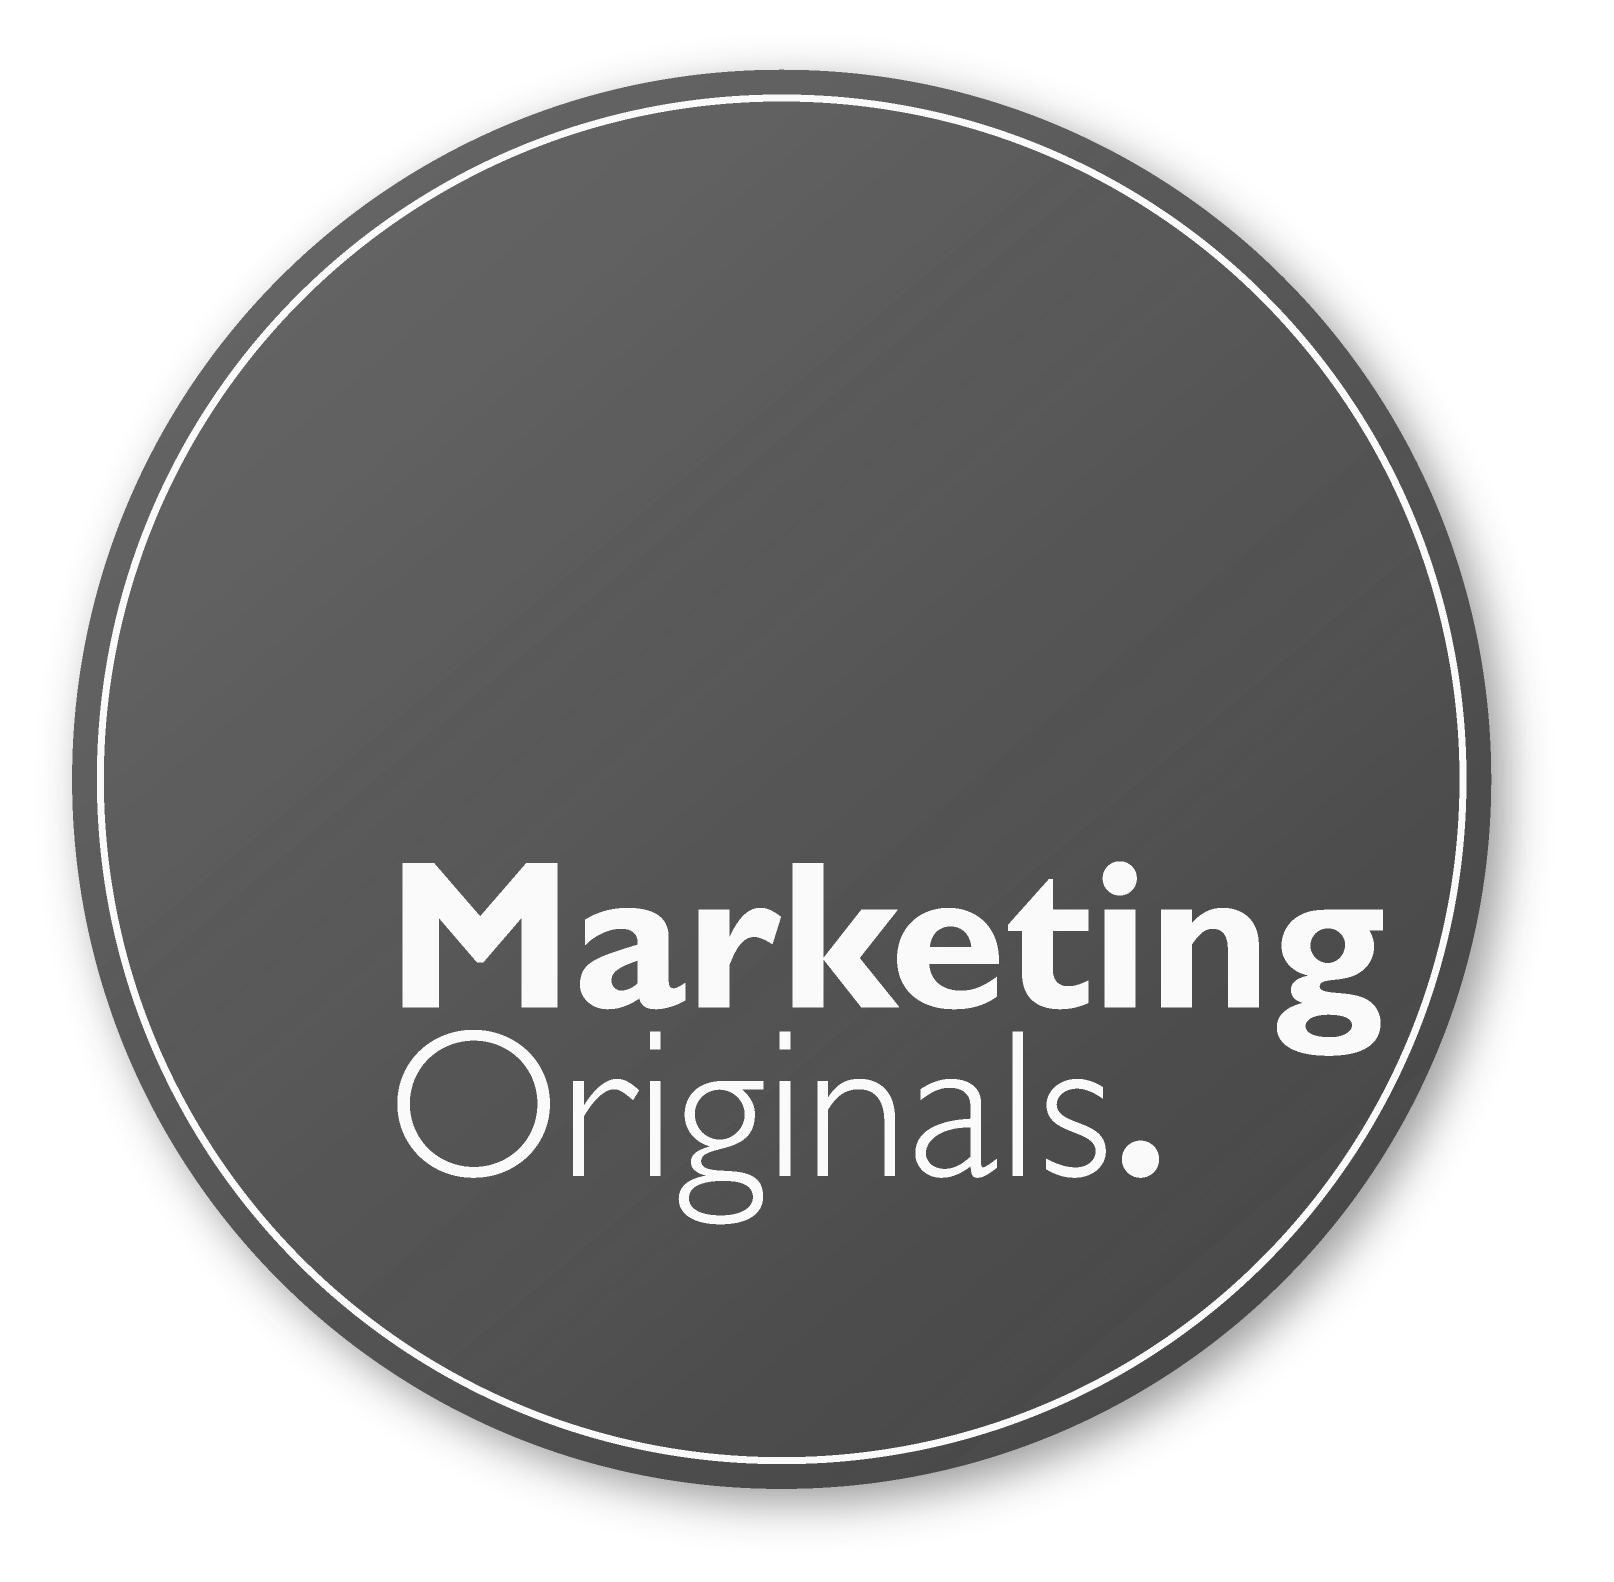 Marketing Originals. profile on Qualified.One